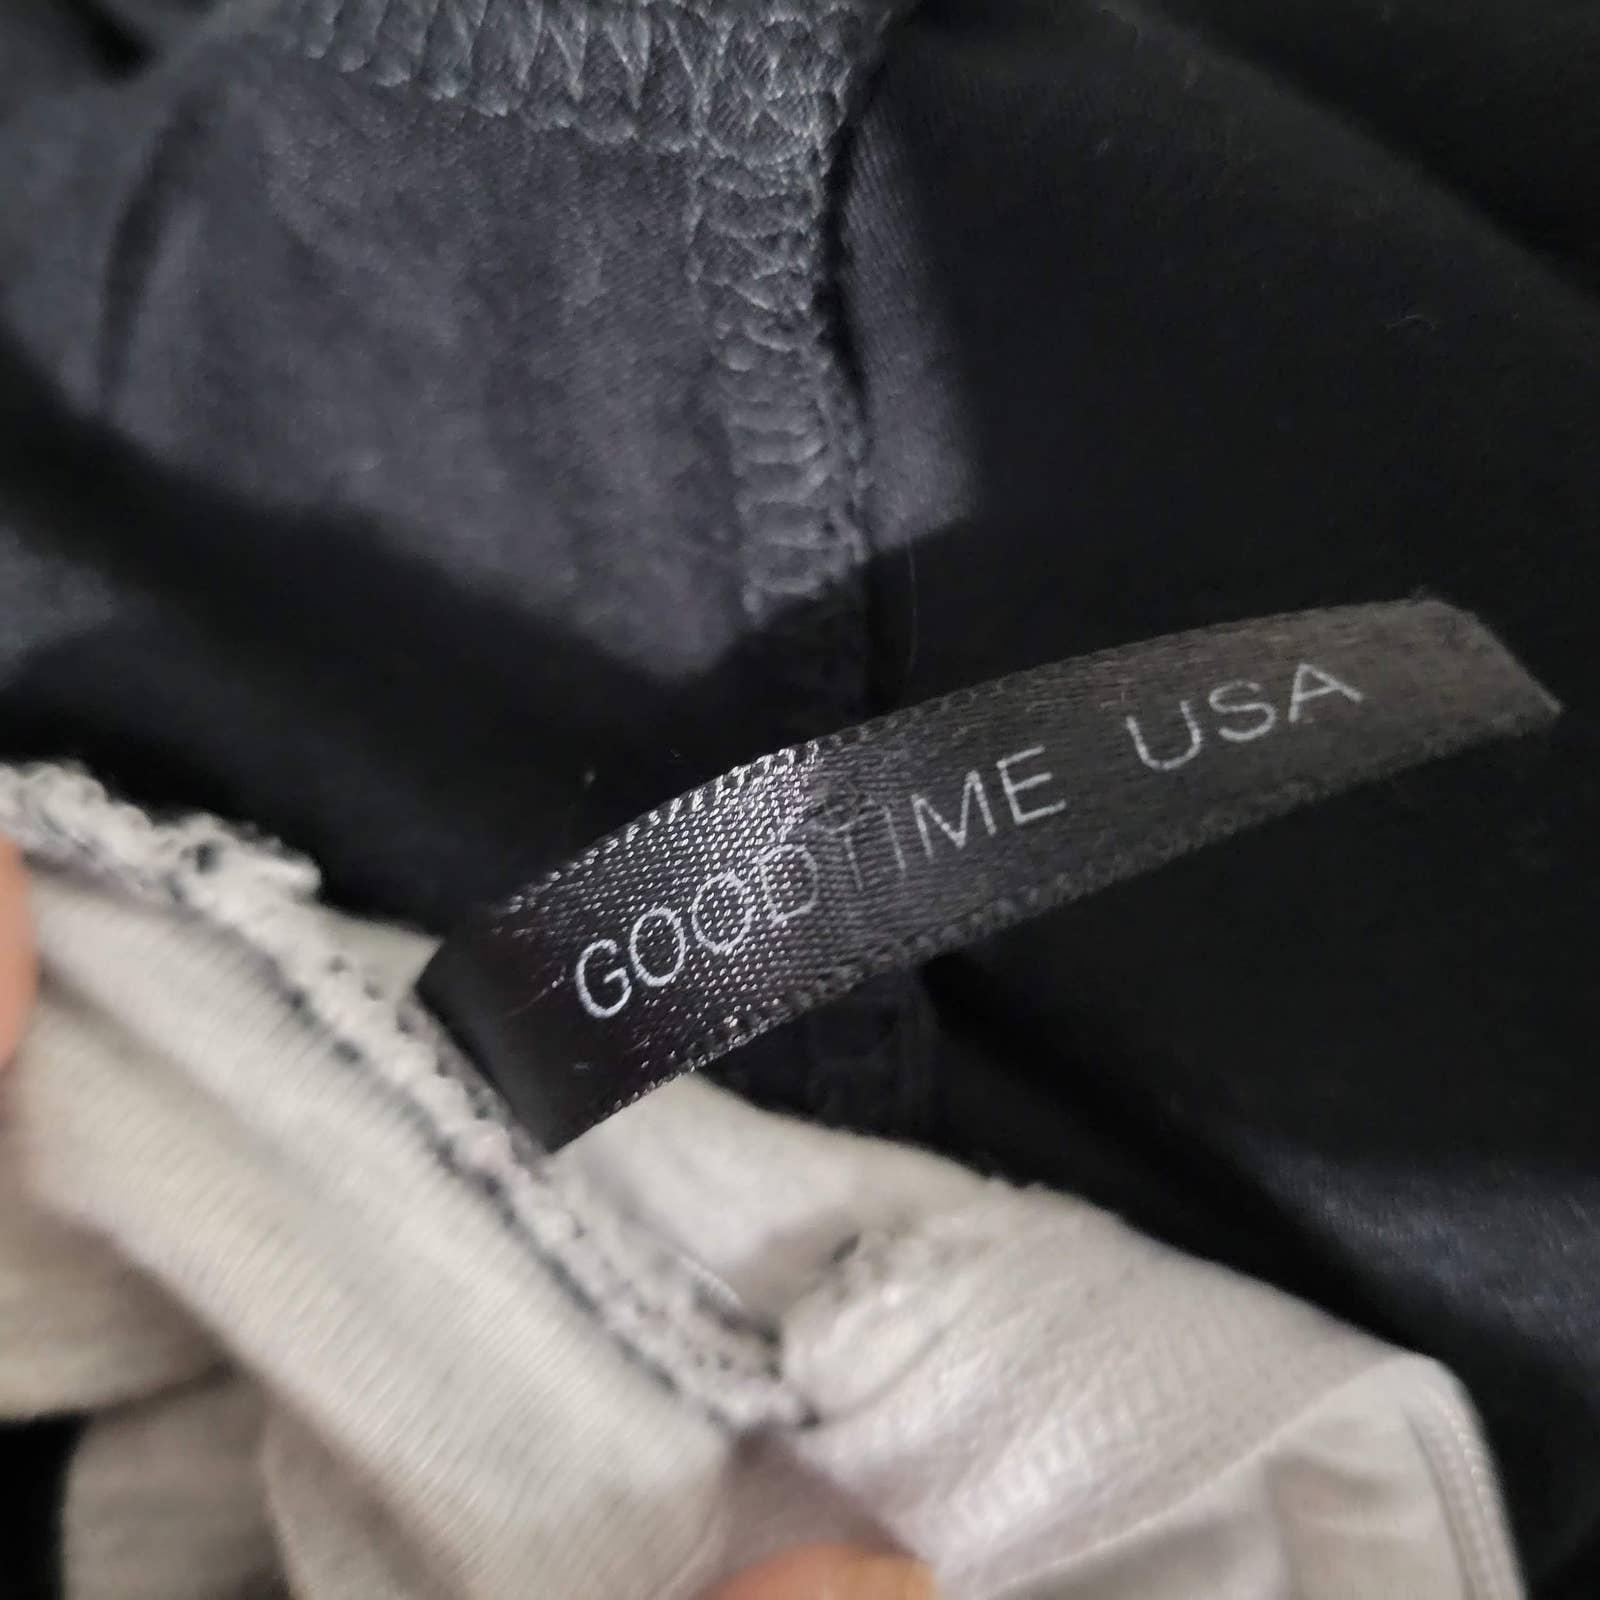 GoodTime USA Illusion Dress Black Jersey Knit Bodycon Hourglass Mini Size Large